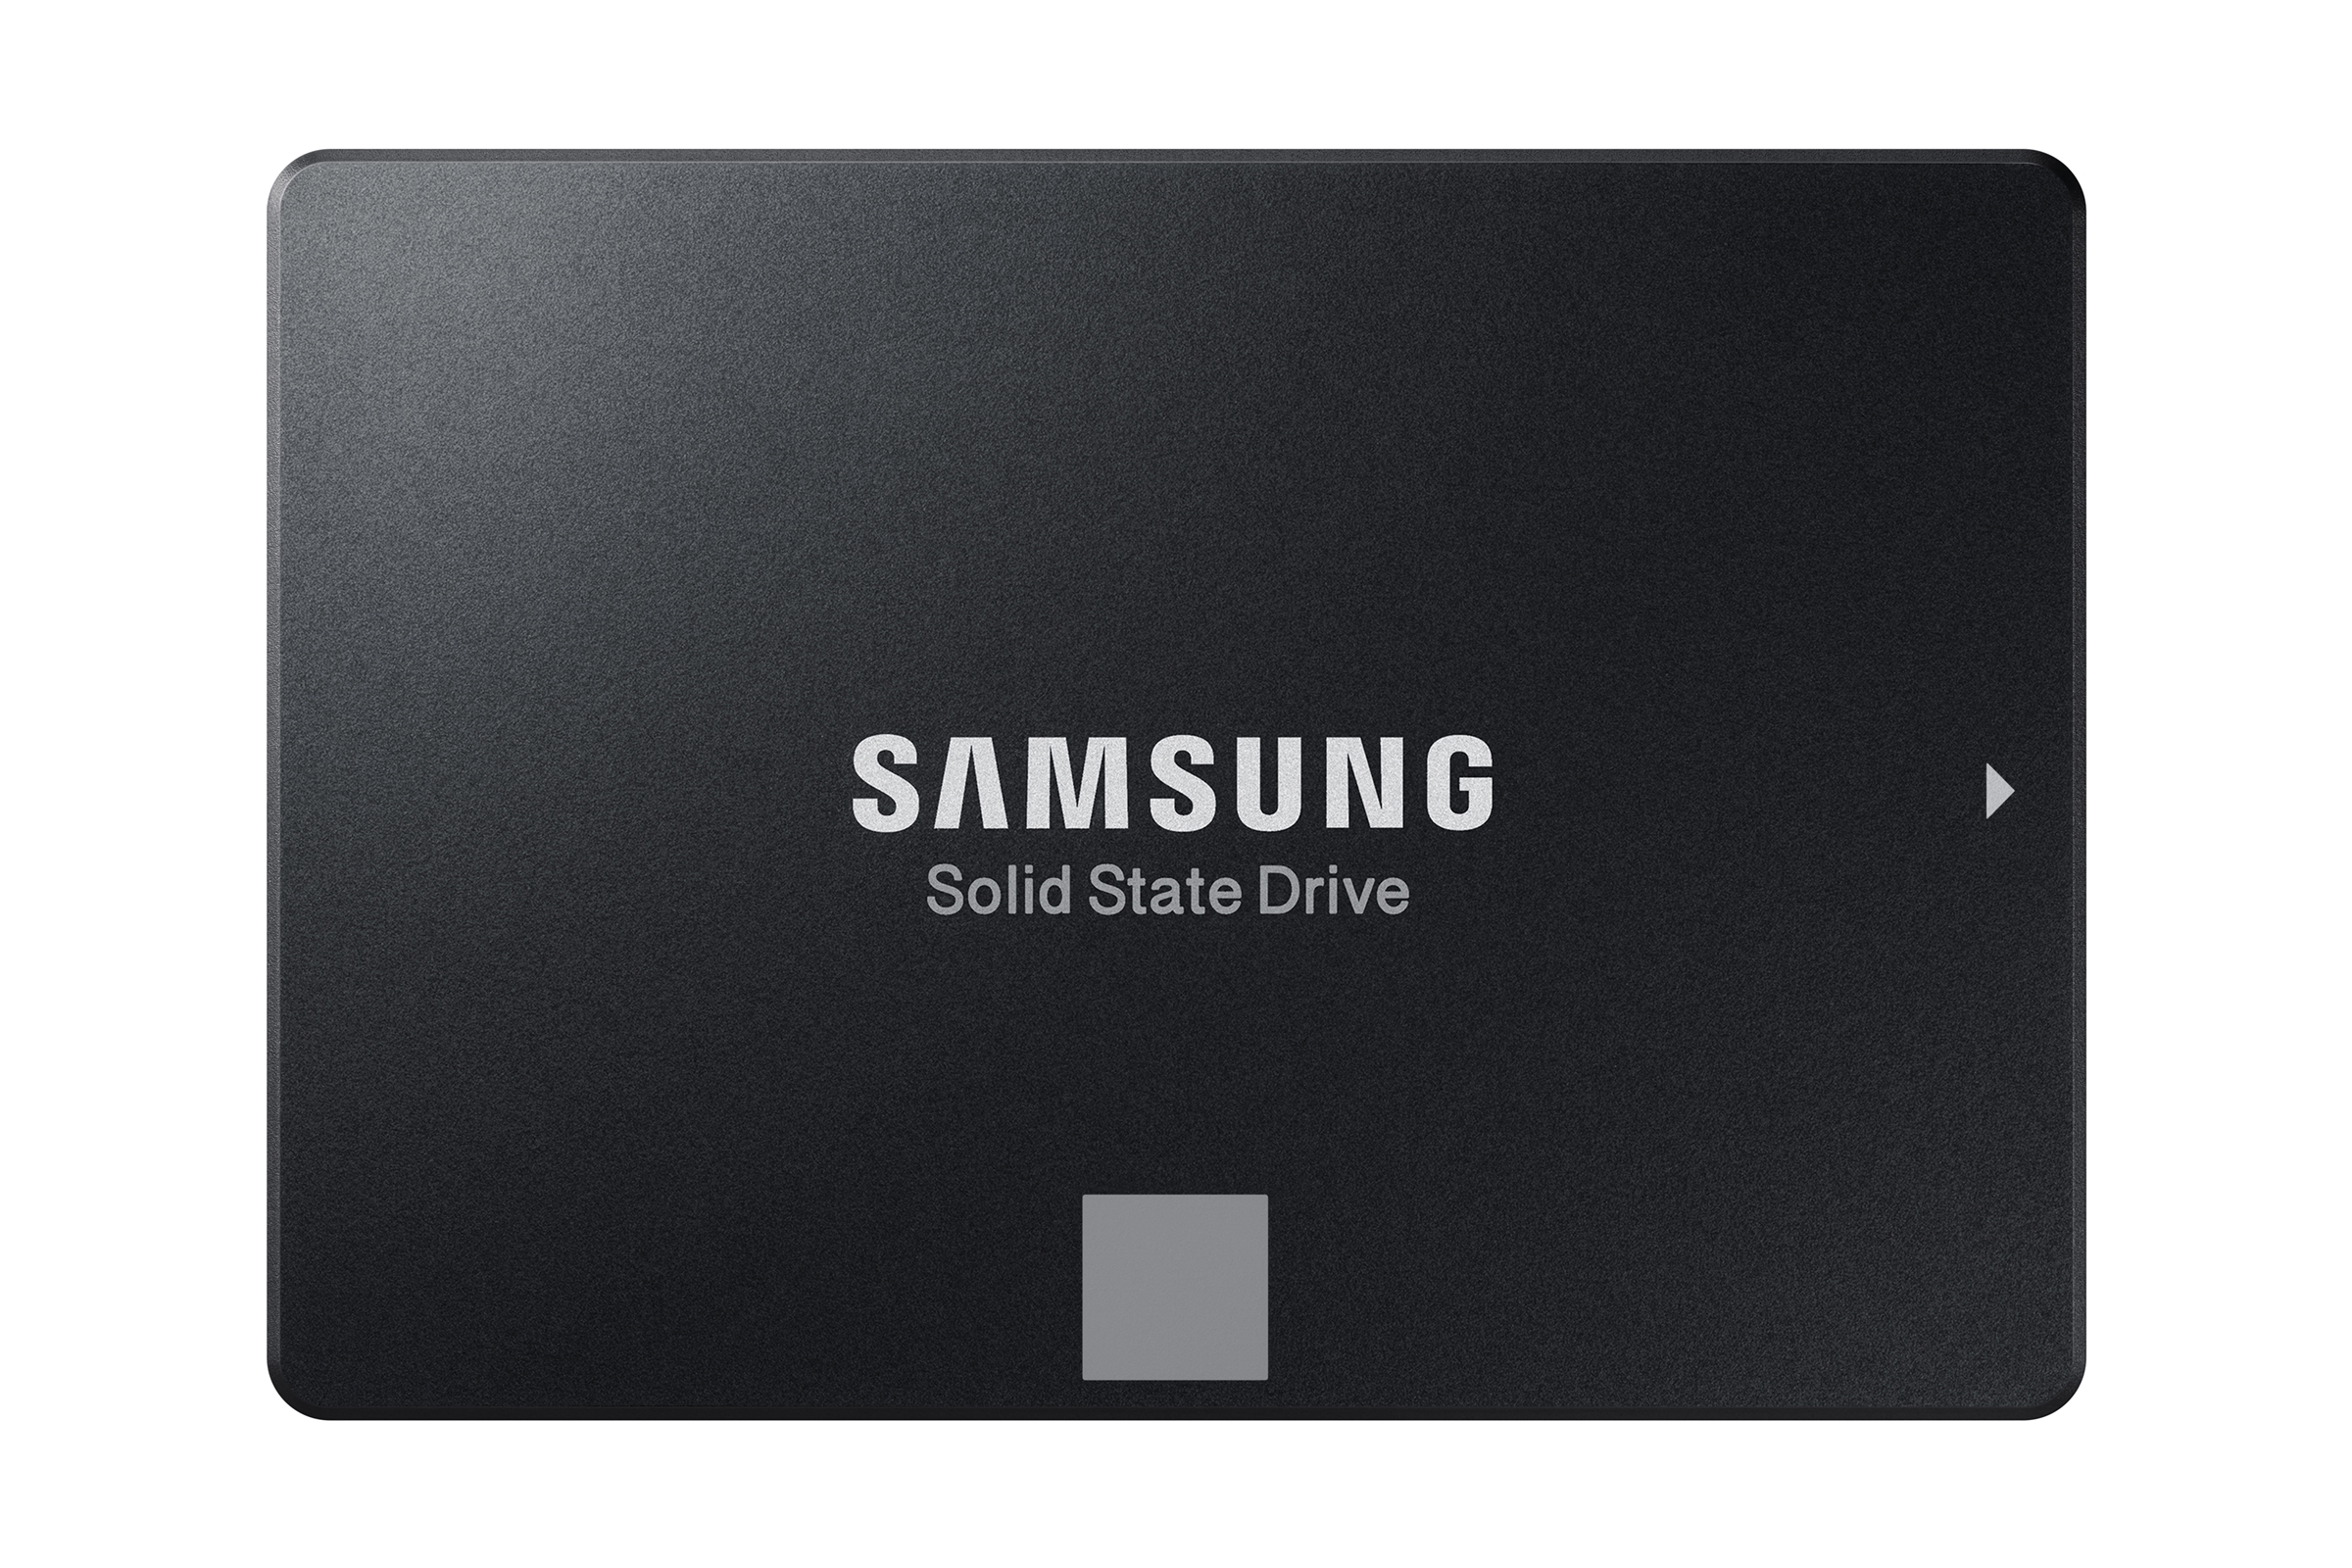 Media asset in full size related to 3dfxzone.it news item entitled as follows: Samsung lancia ufficialmente le linee di drive SSD 860 Pro e 860 EVO | Image Name: news27753_Samsung-860-Pro-860-EVO_6.jpg